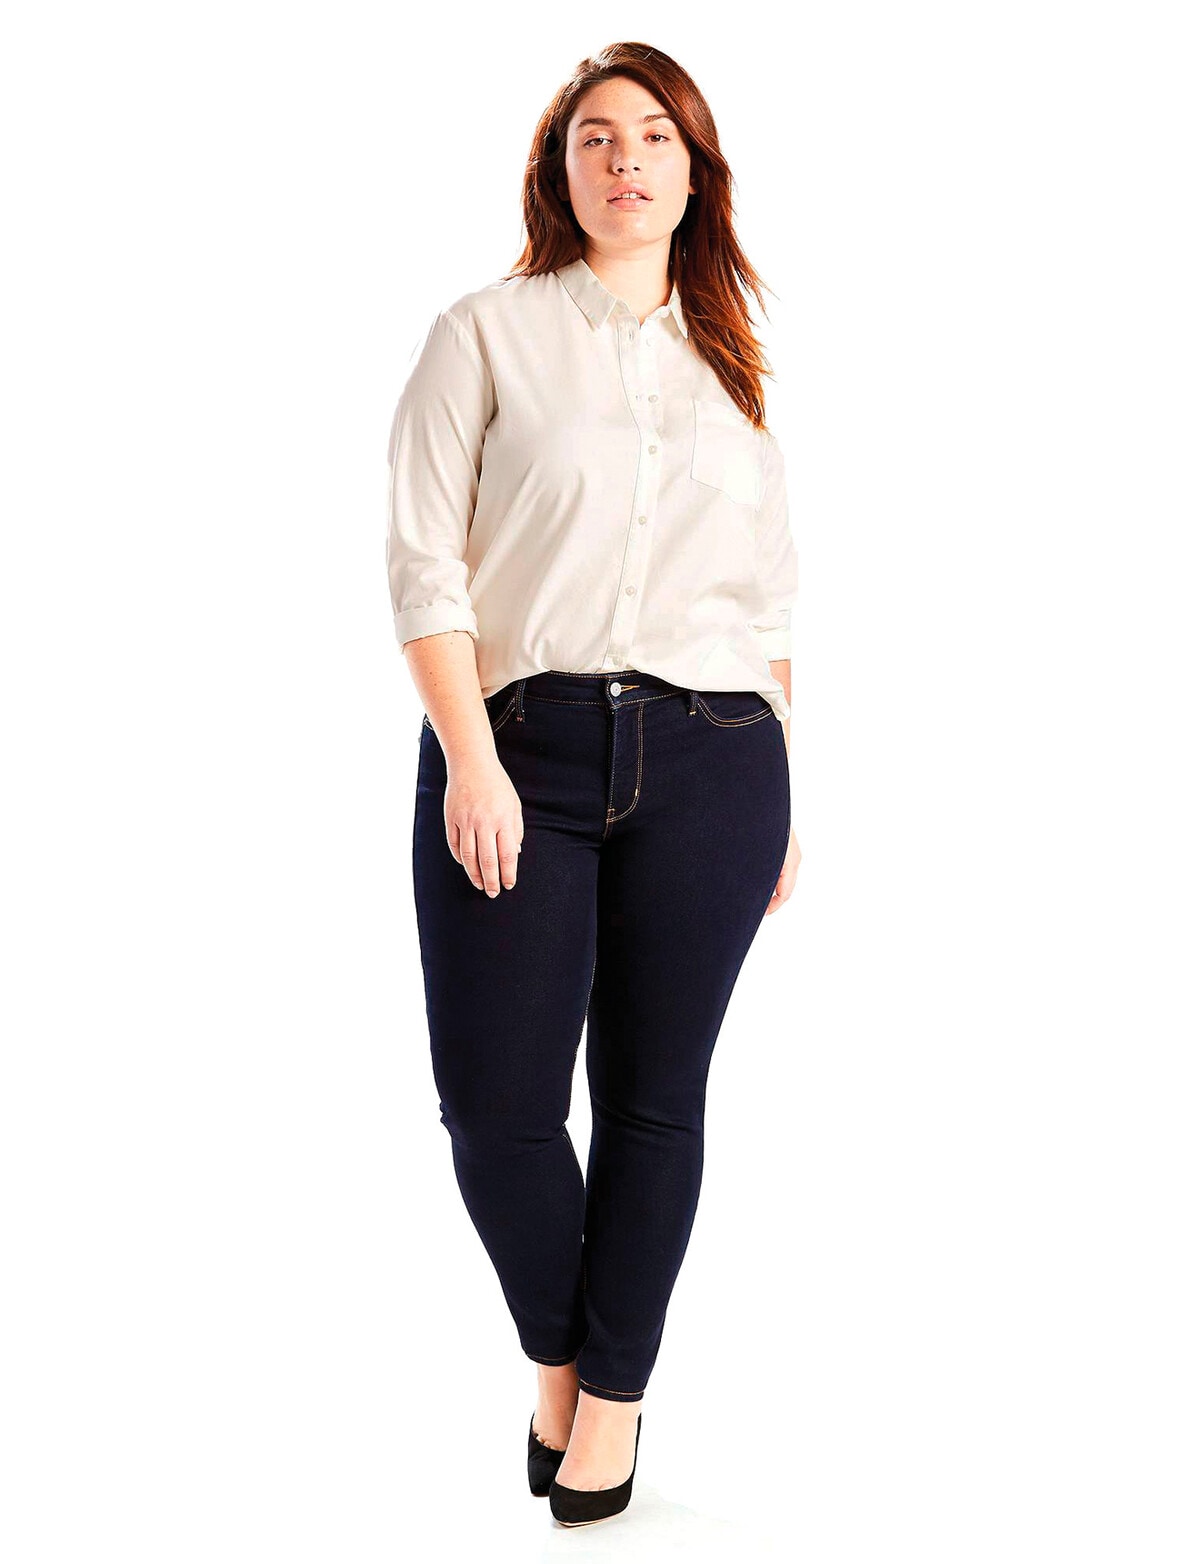 311 Shaping Skinny Women's Jeans (plus Size) - Black